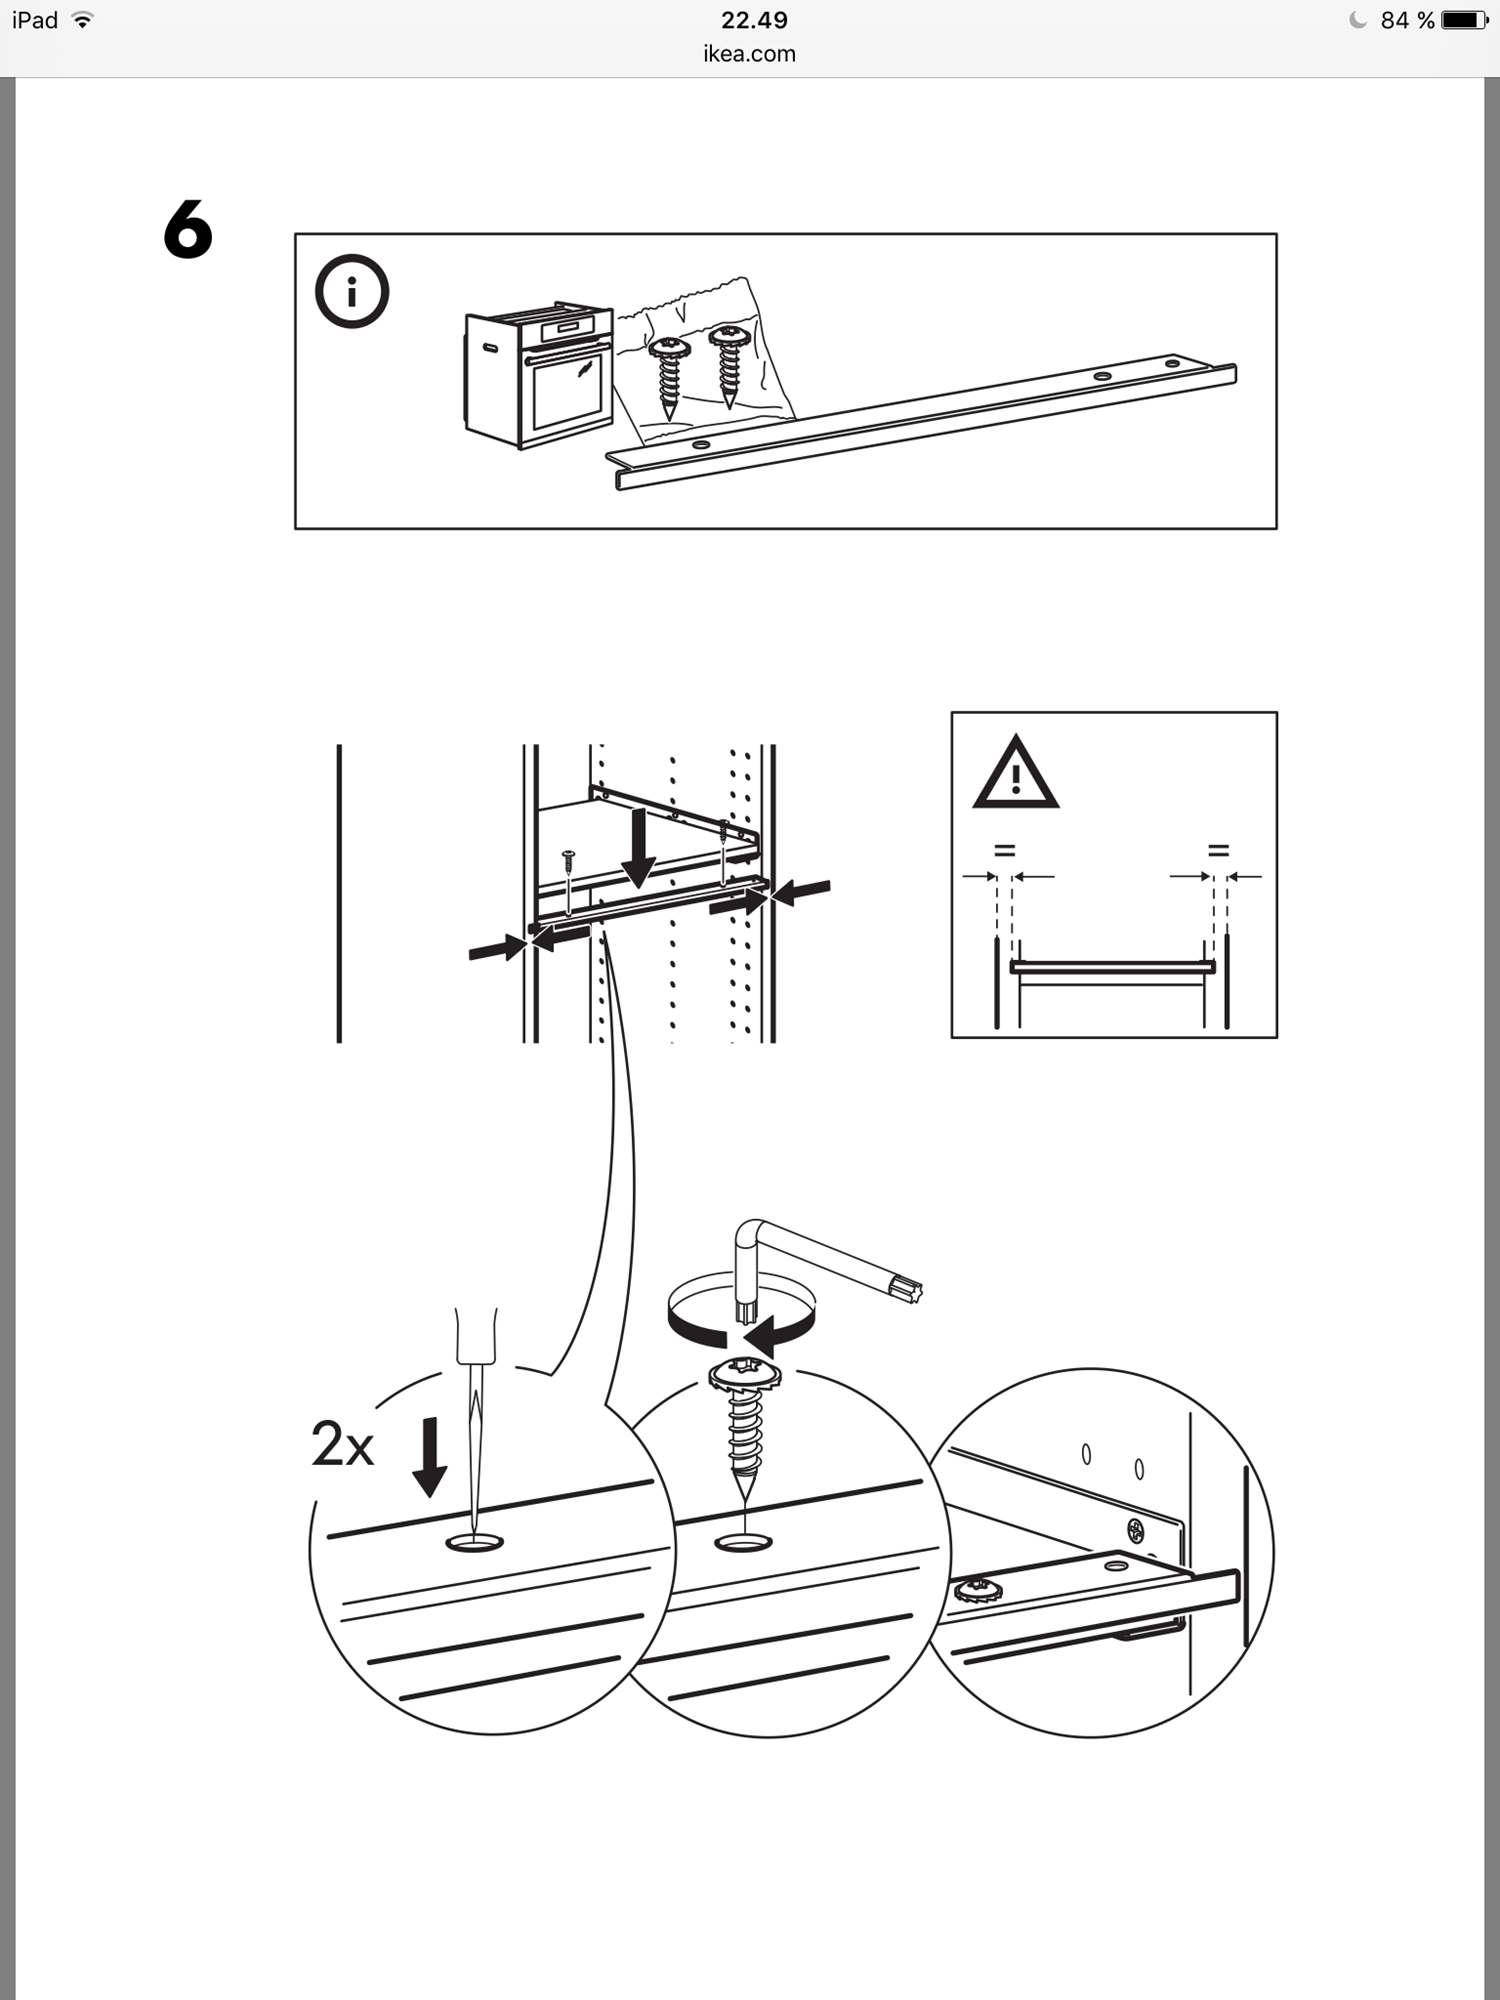 Mellomrom/glis over komfyr i IKEA høyskap? - image.png - veos